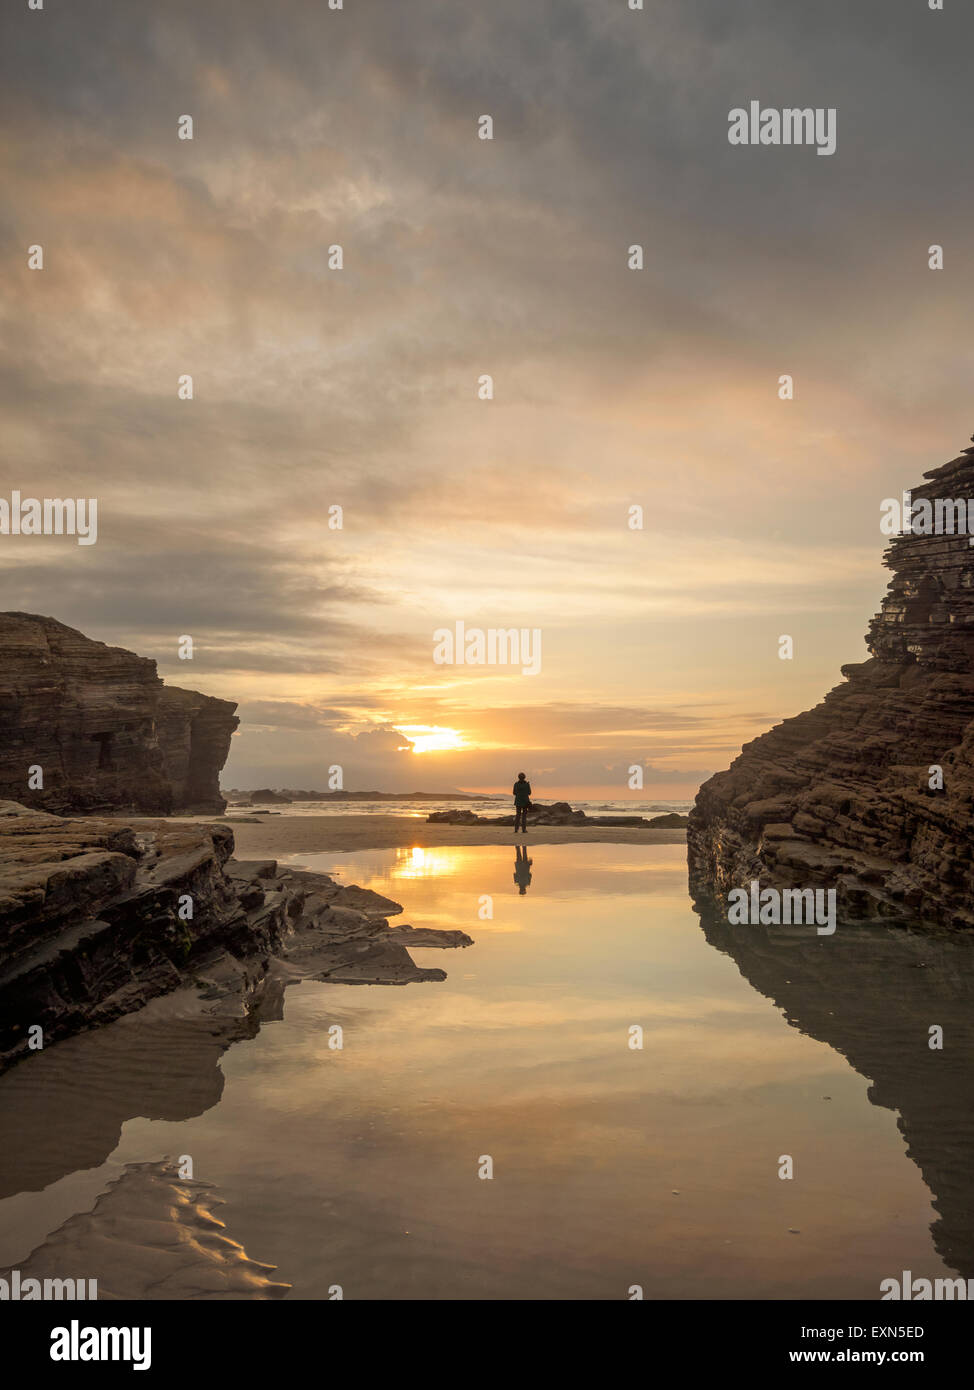 Spain, Galicia, Ribadeo, Playa de Aguas Santas at sunset, small person on the beach Stock Photo